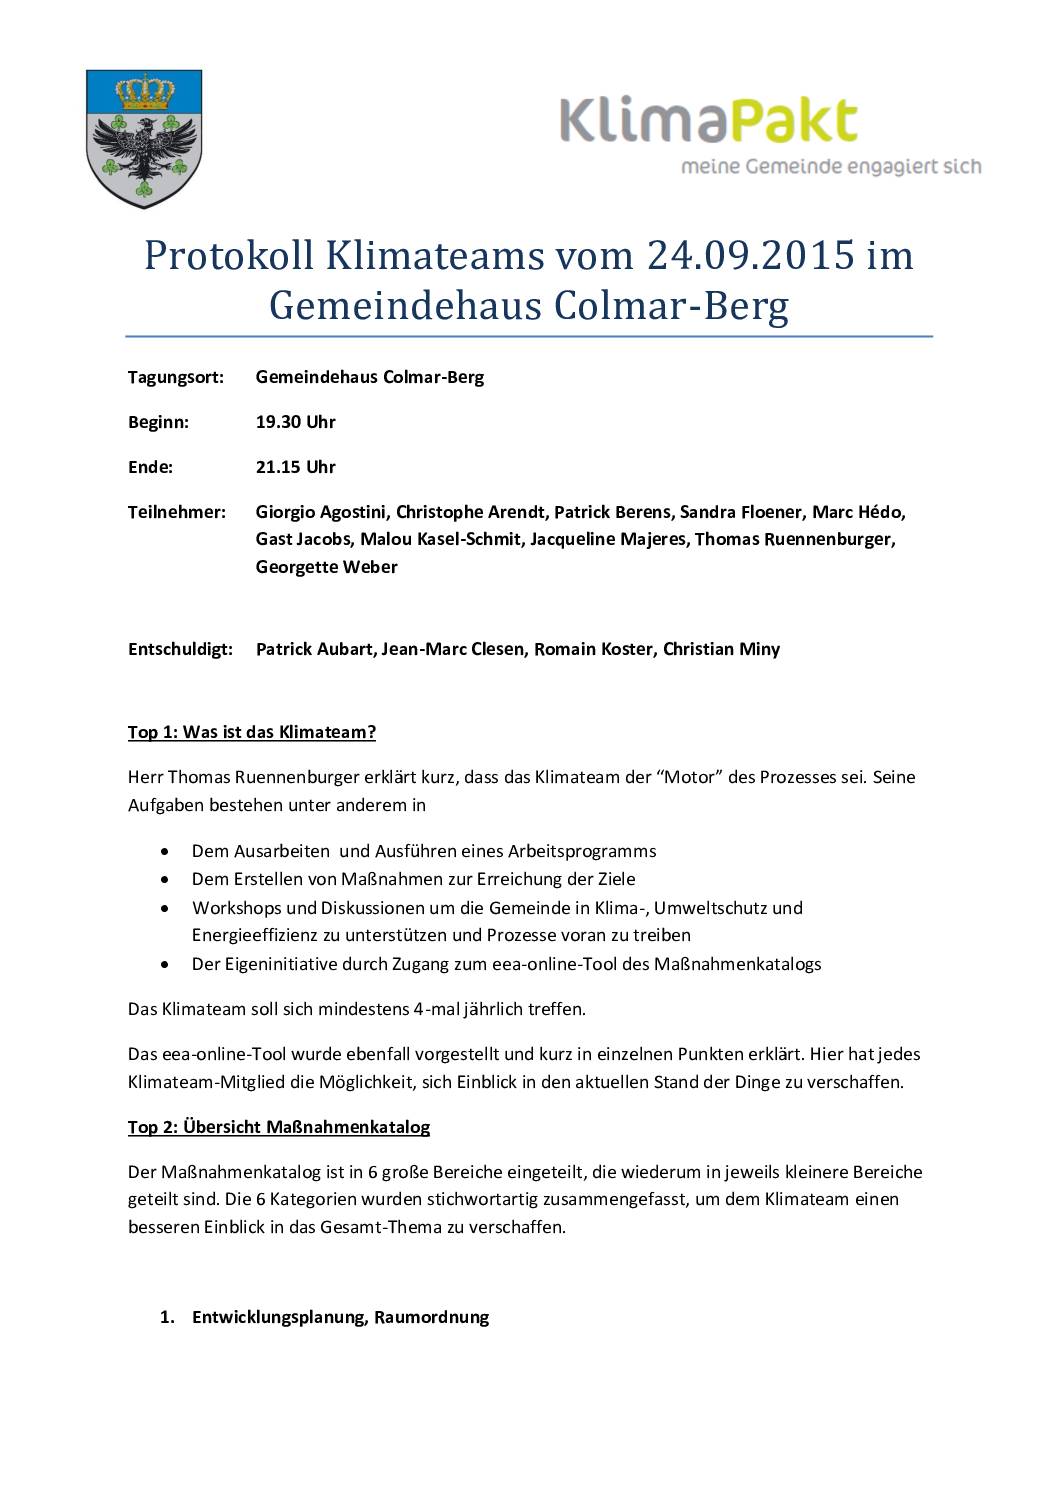 Protokoll Klimateam 2015.09.24